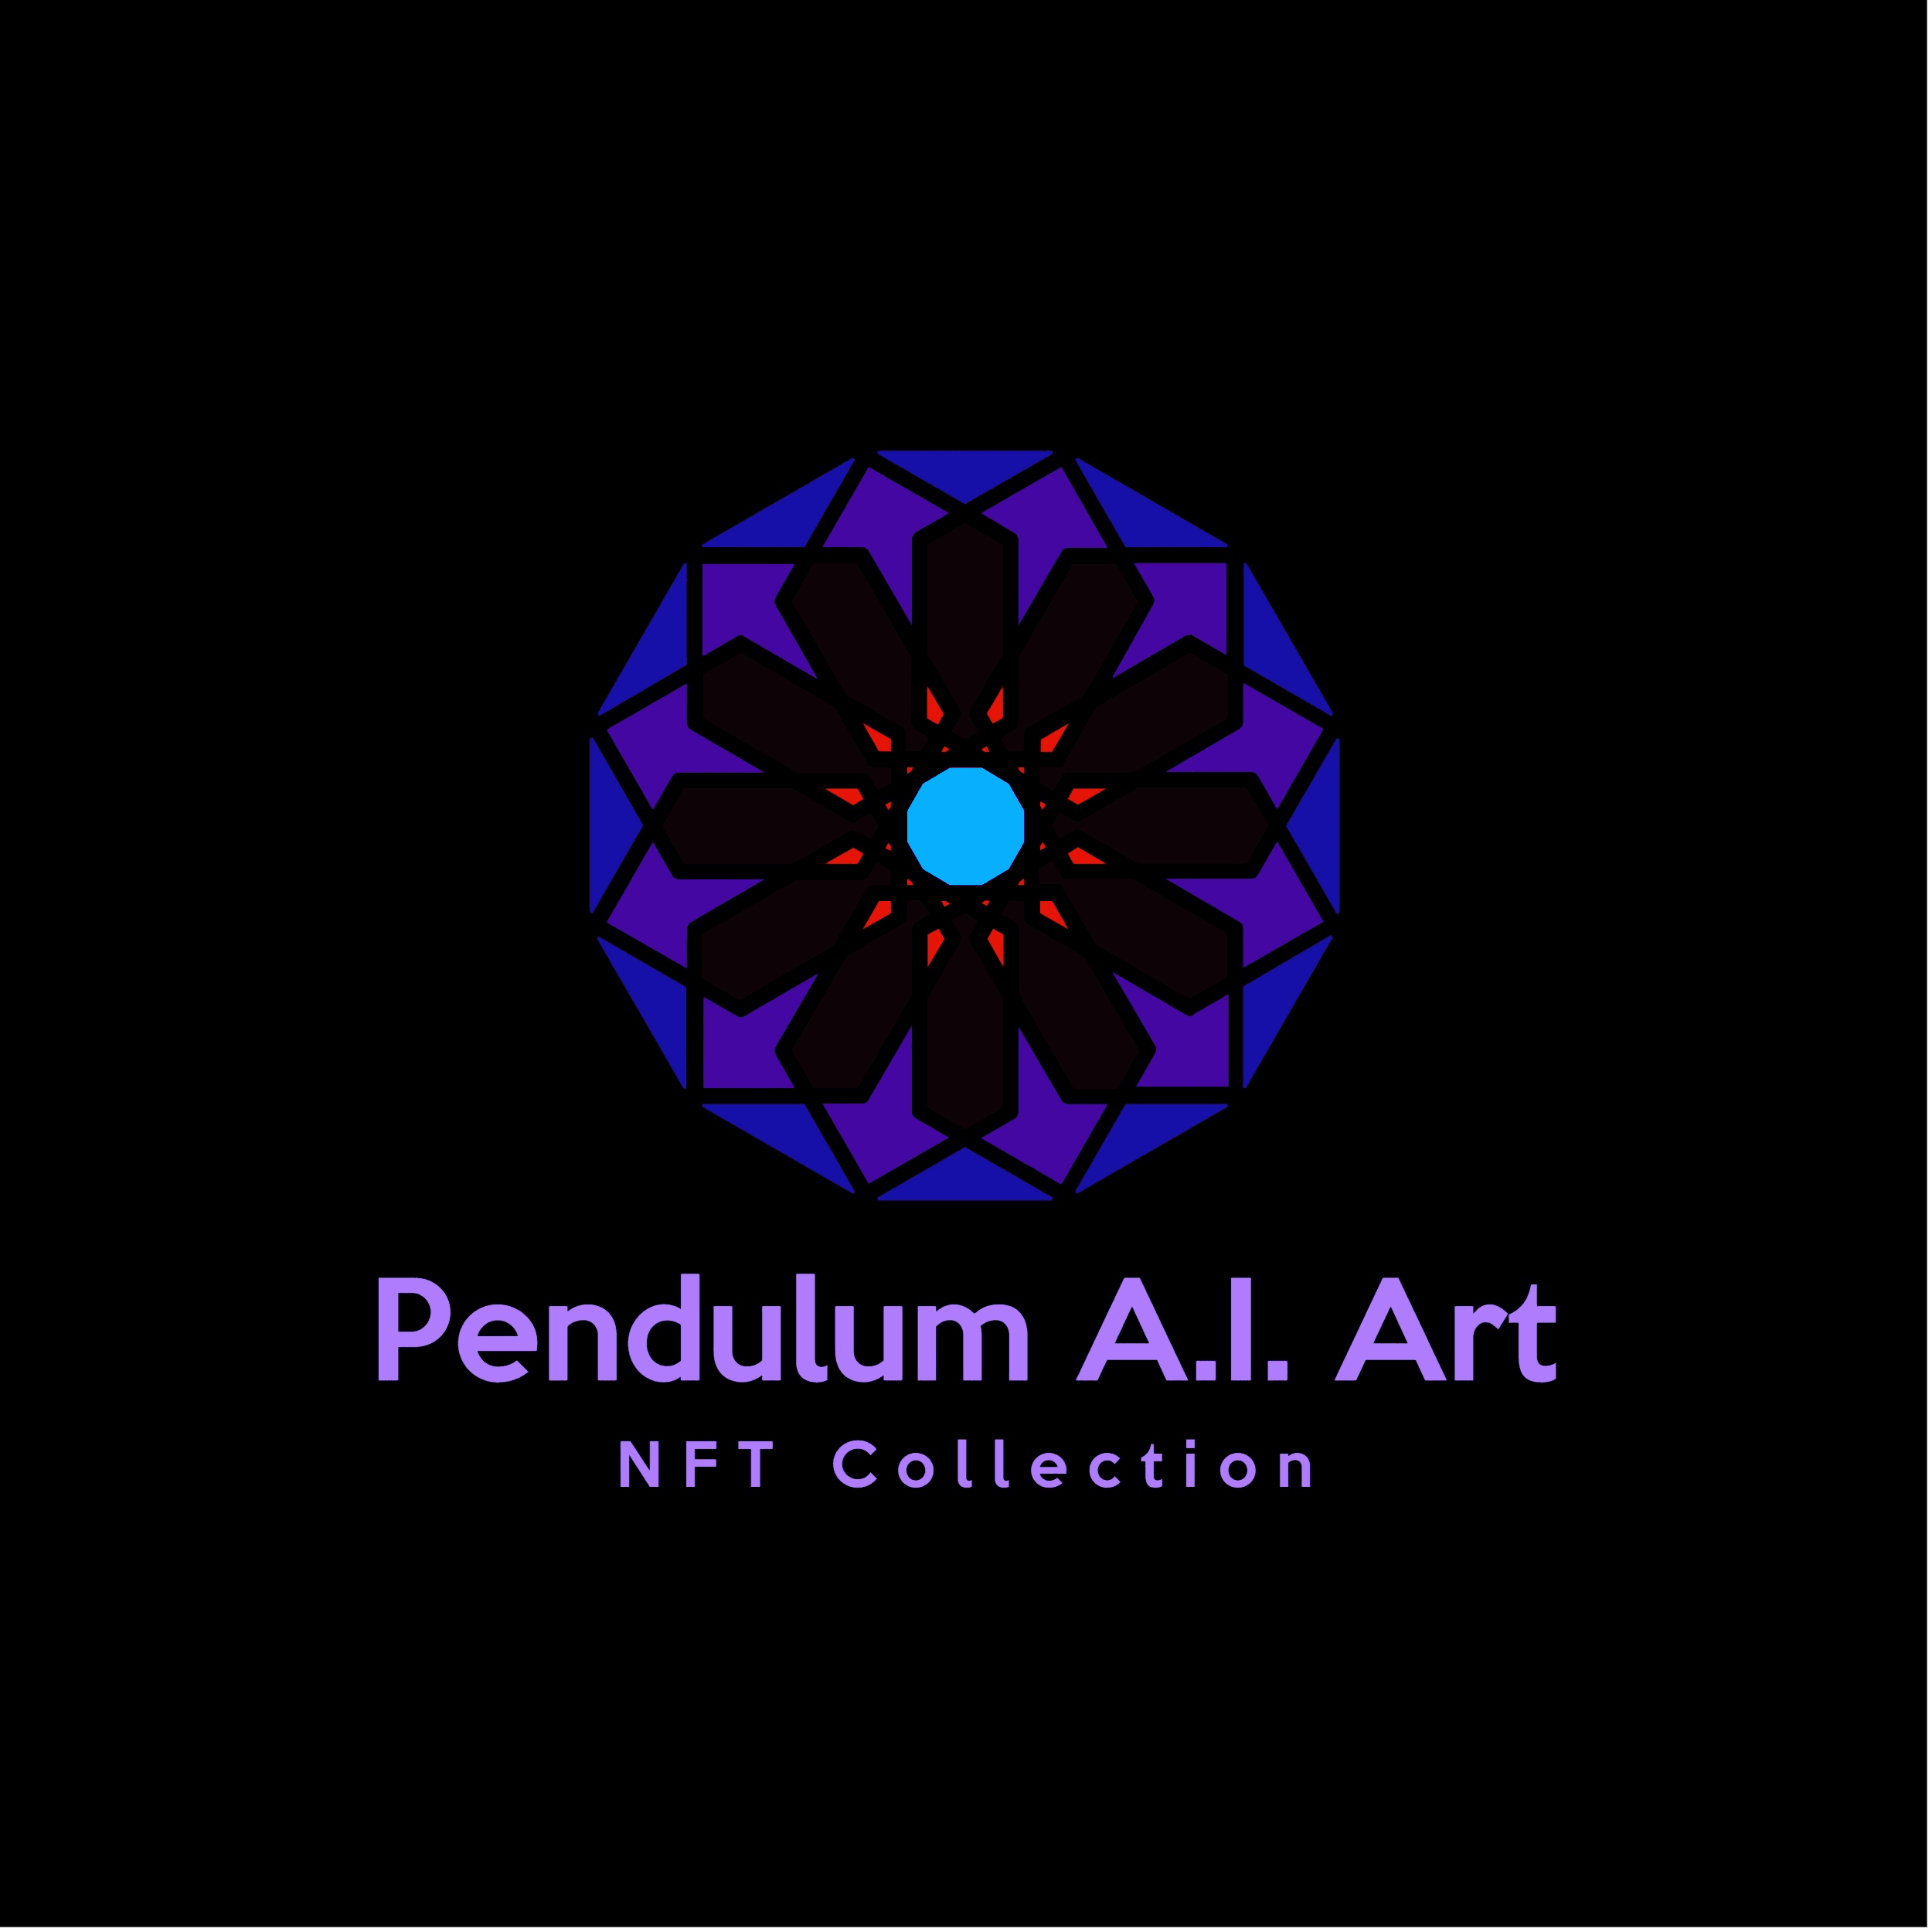 Pendulum A.I. Art Collection